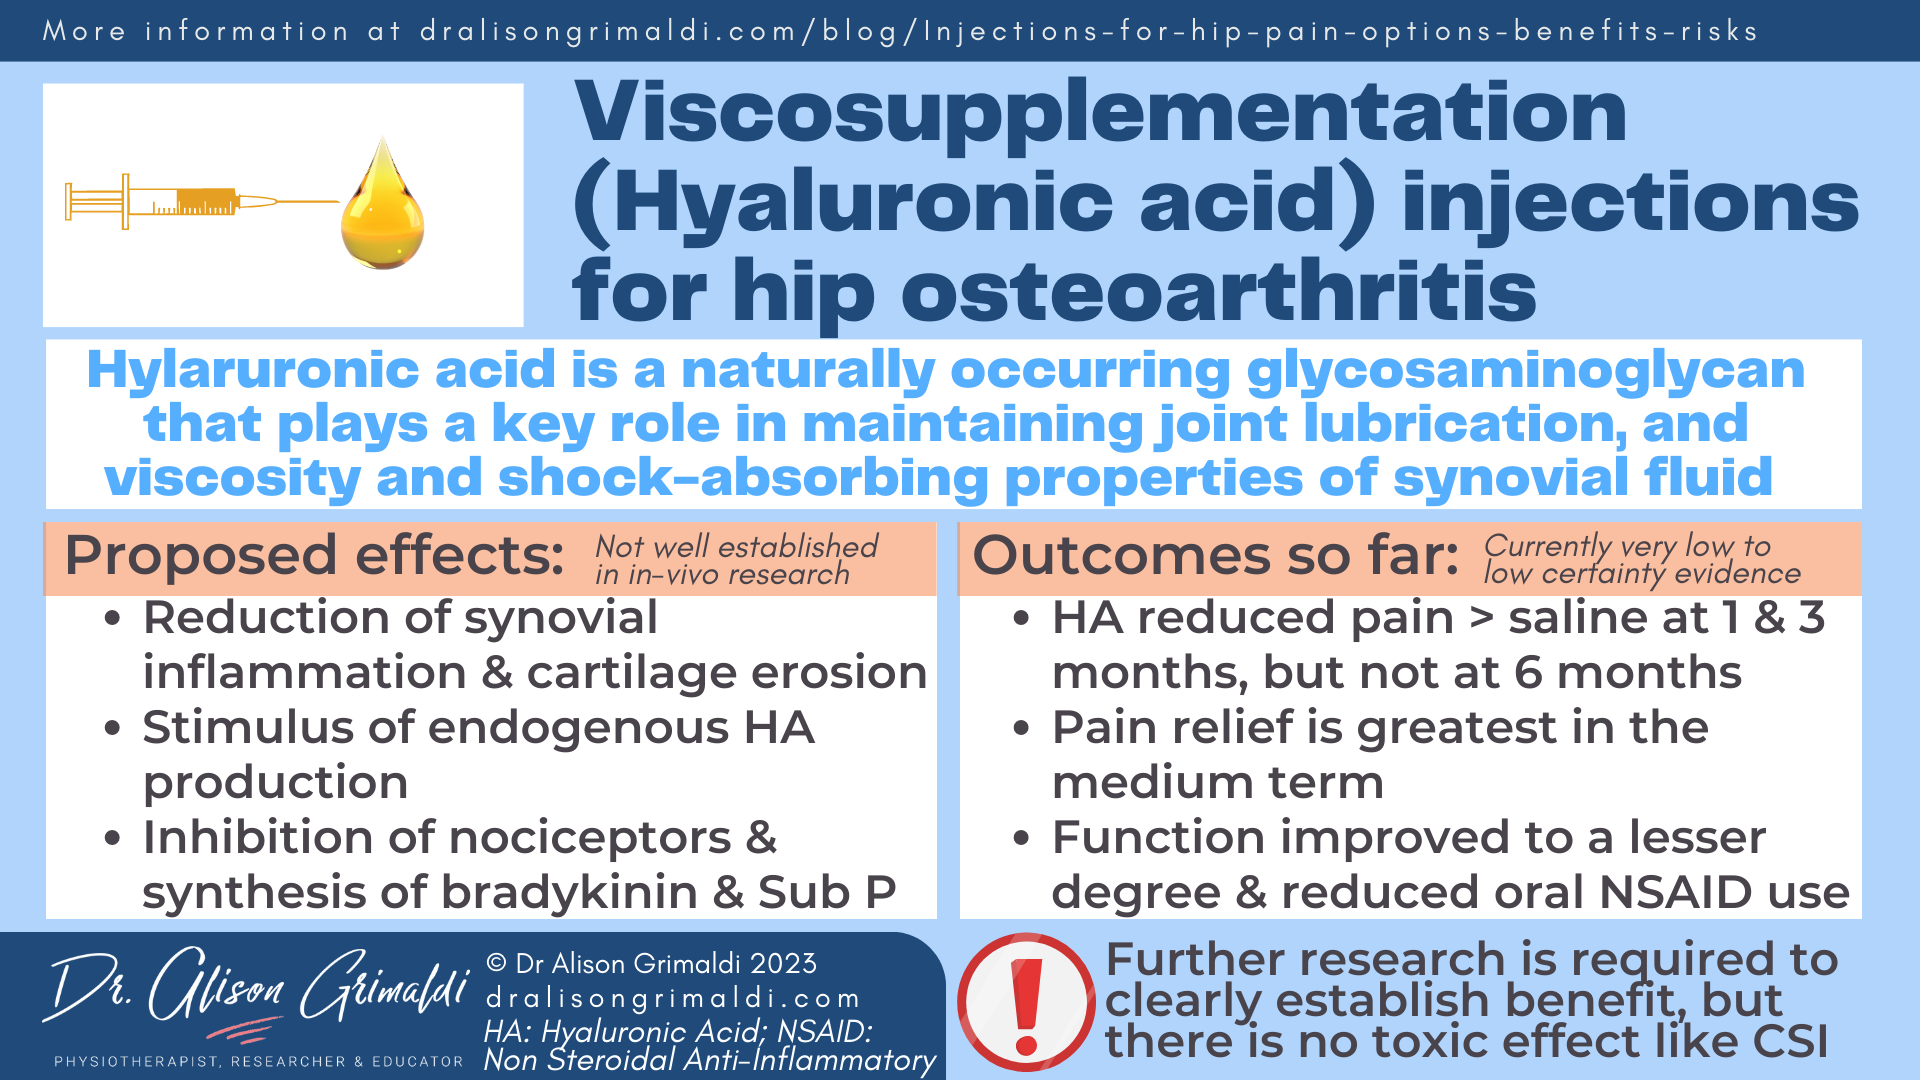 Viscosupplementation (Hyaluronic acid) injections for hip osteoarthritis